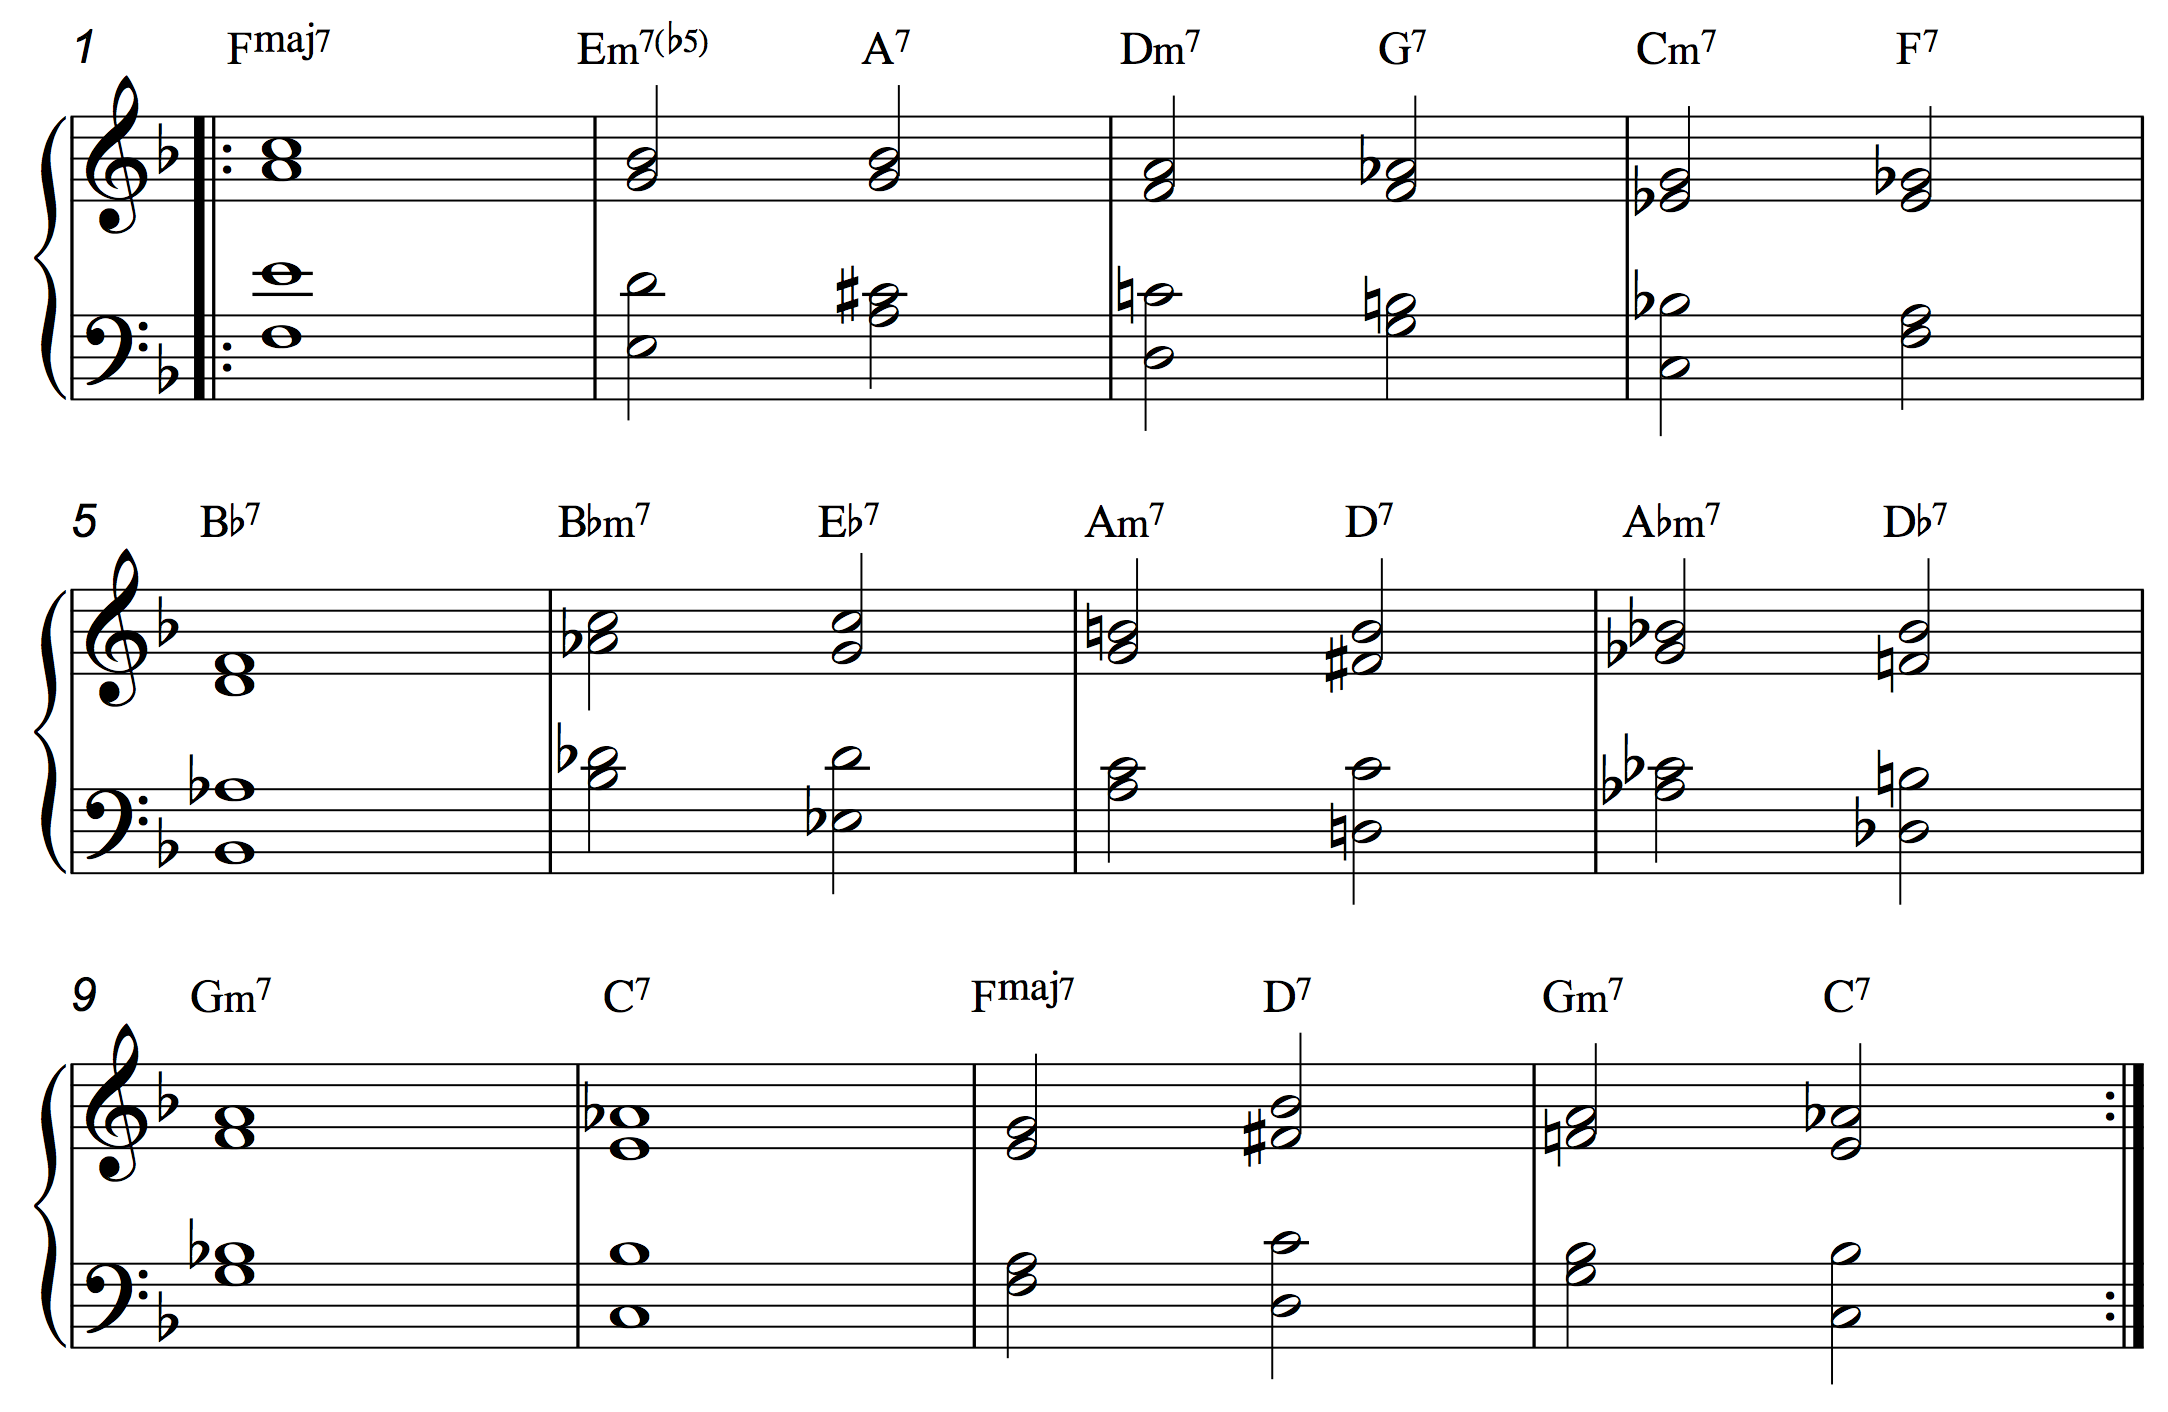 Chord voicings in a bebop 12 bar blues.